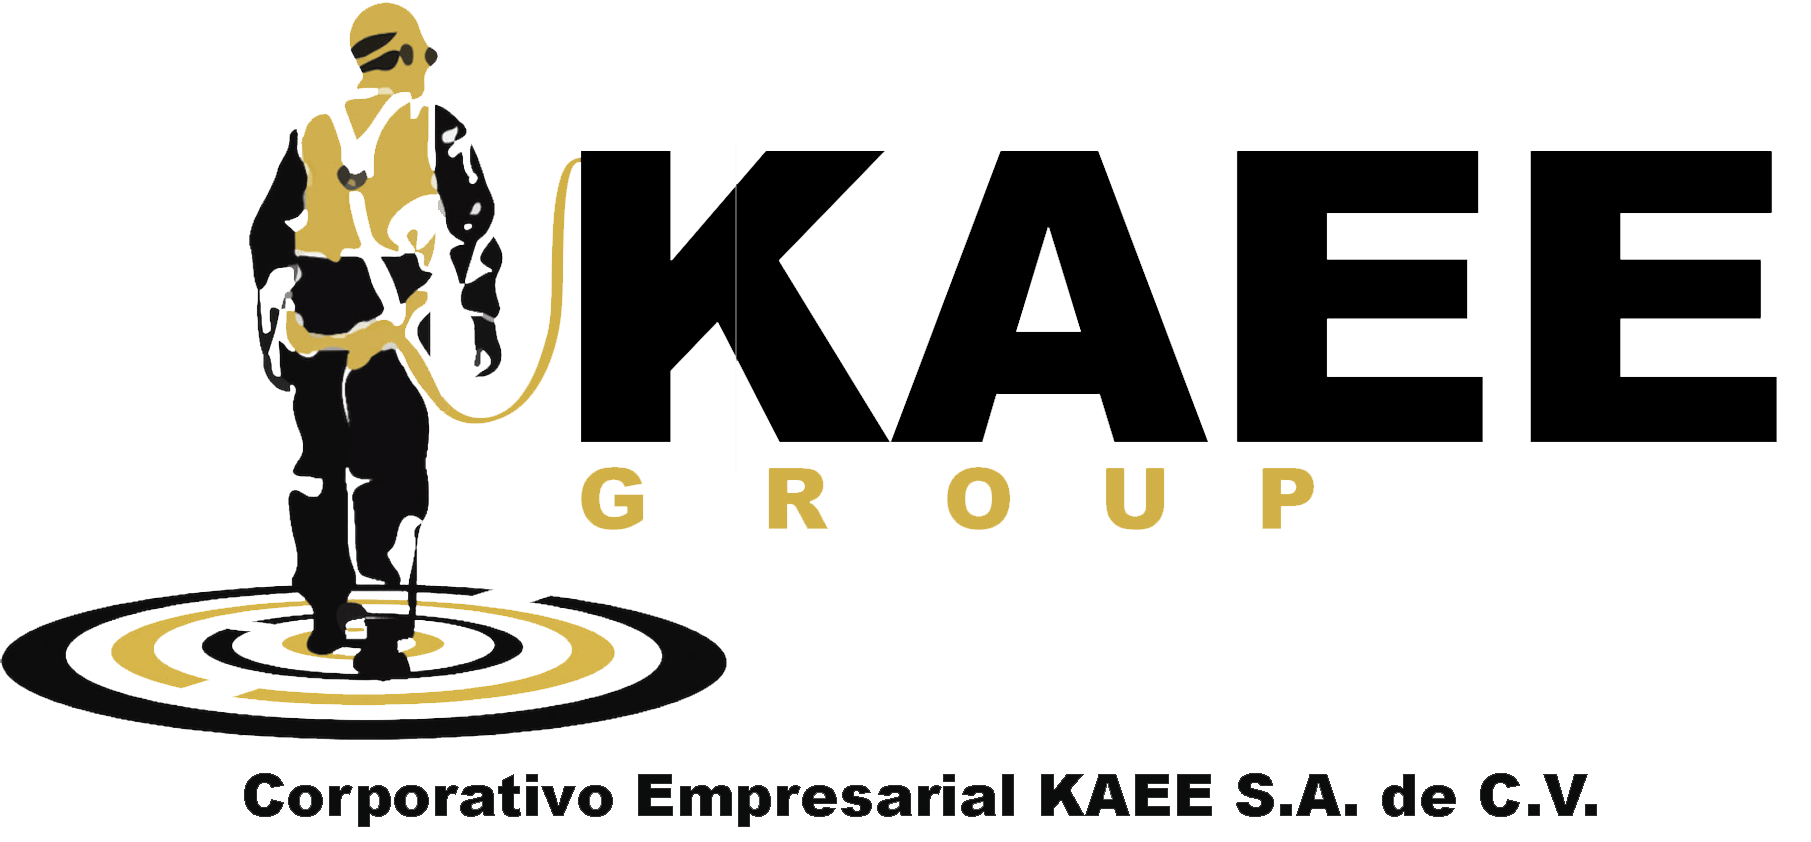 KAEE Group